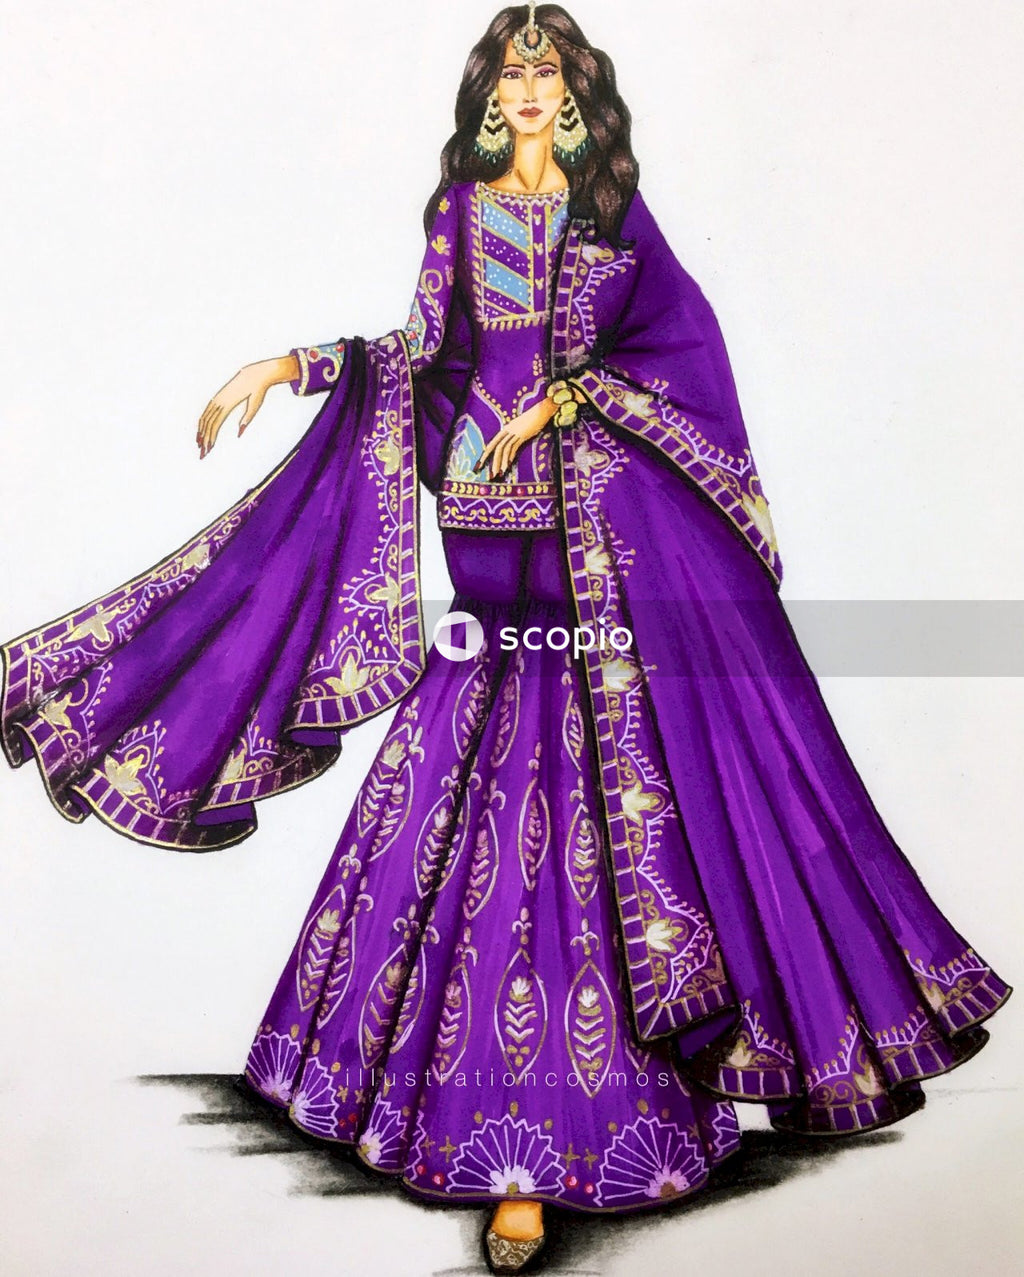 Woman in purple and brown sari